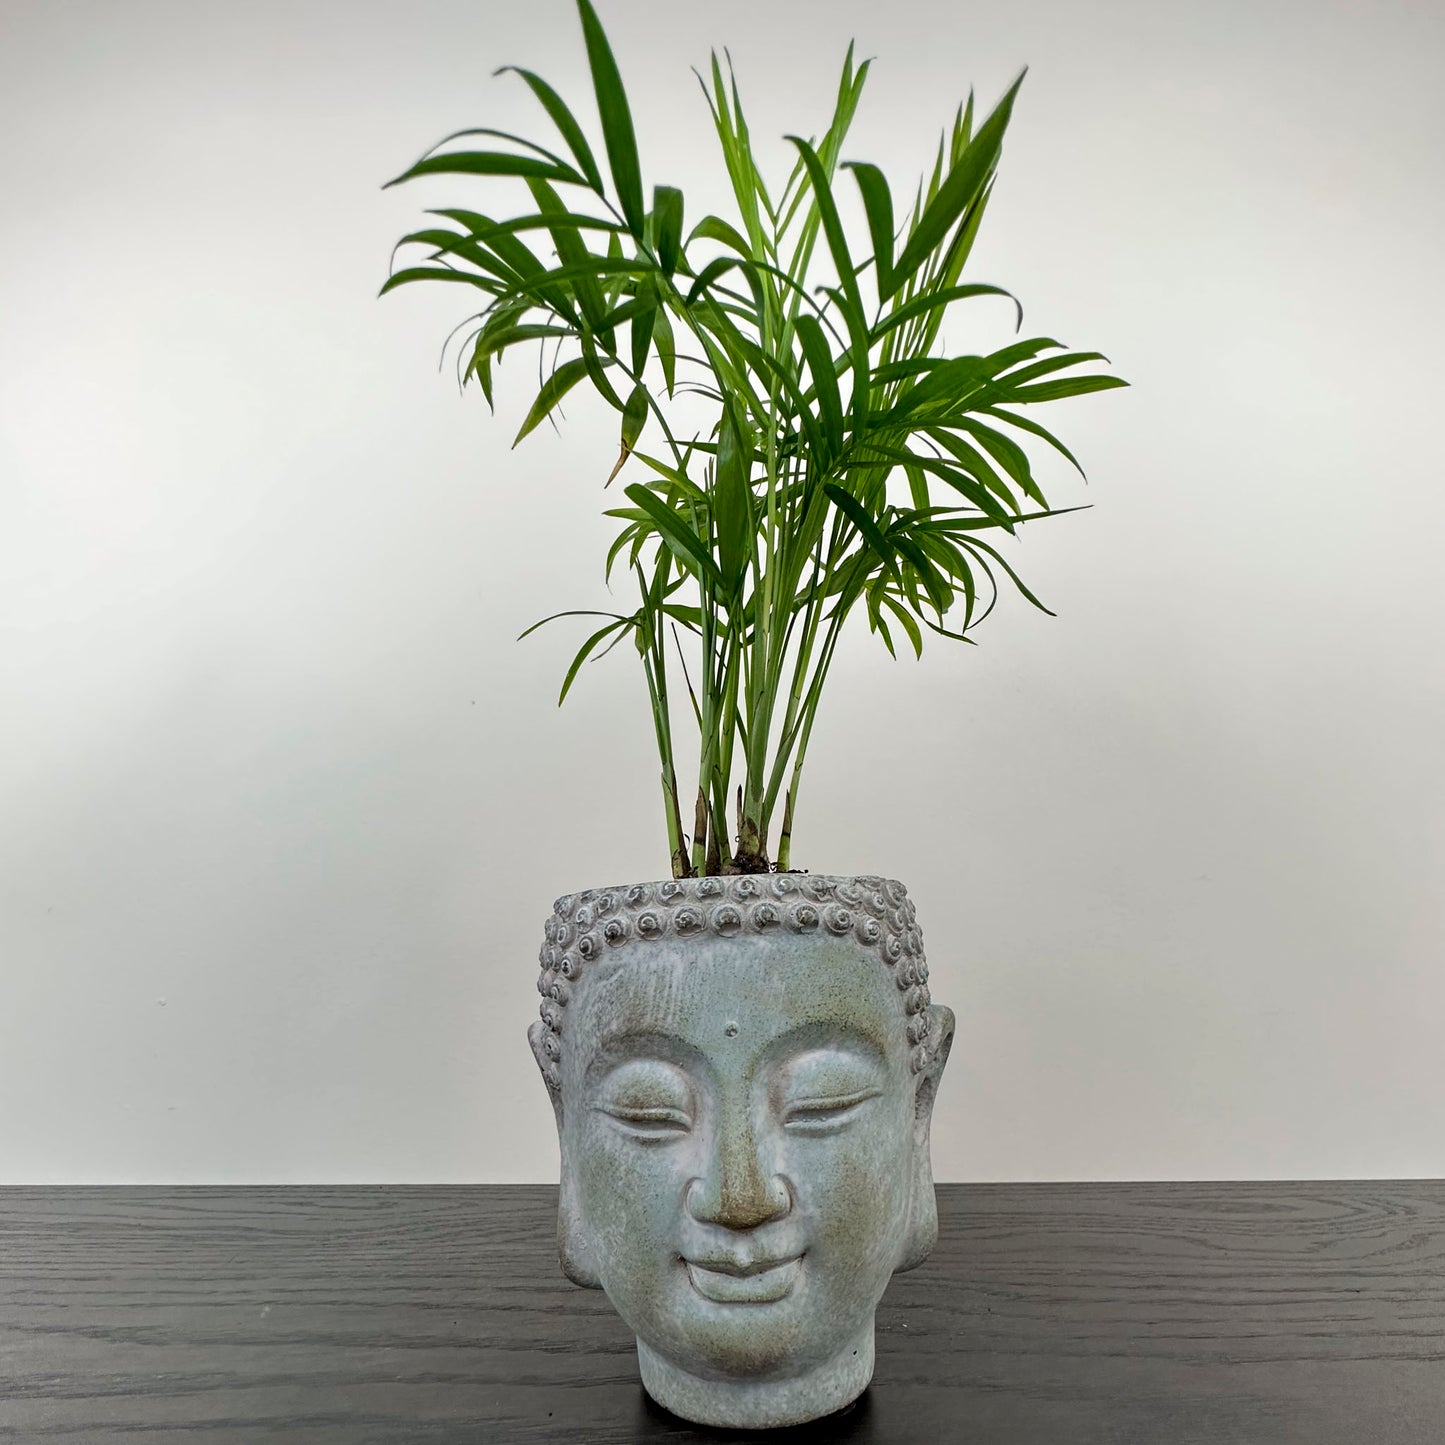 Close up of Buddha head planter holding a plam